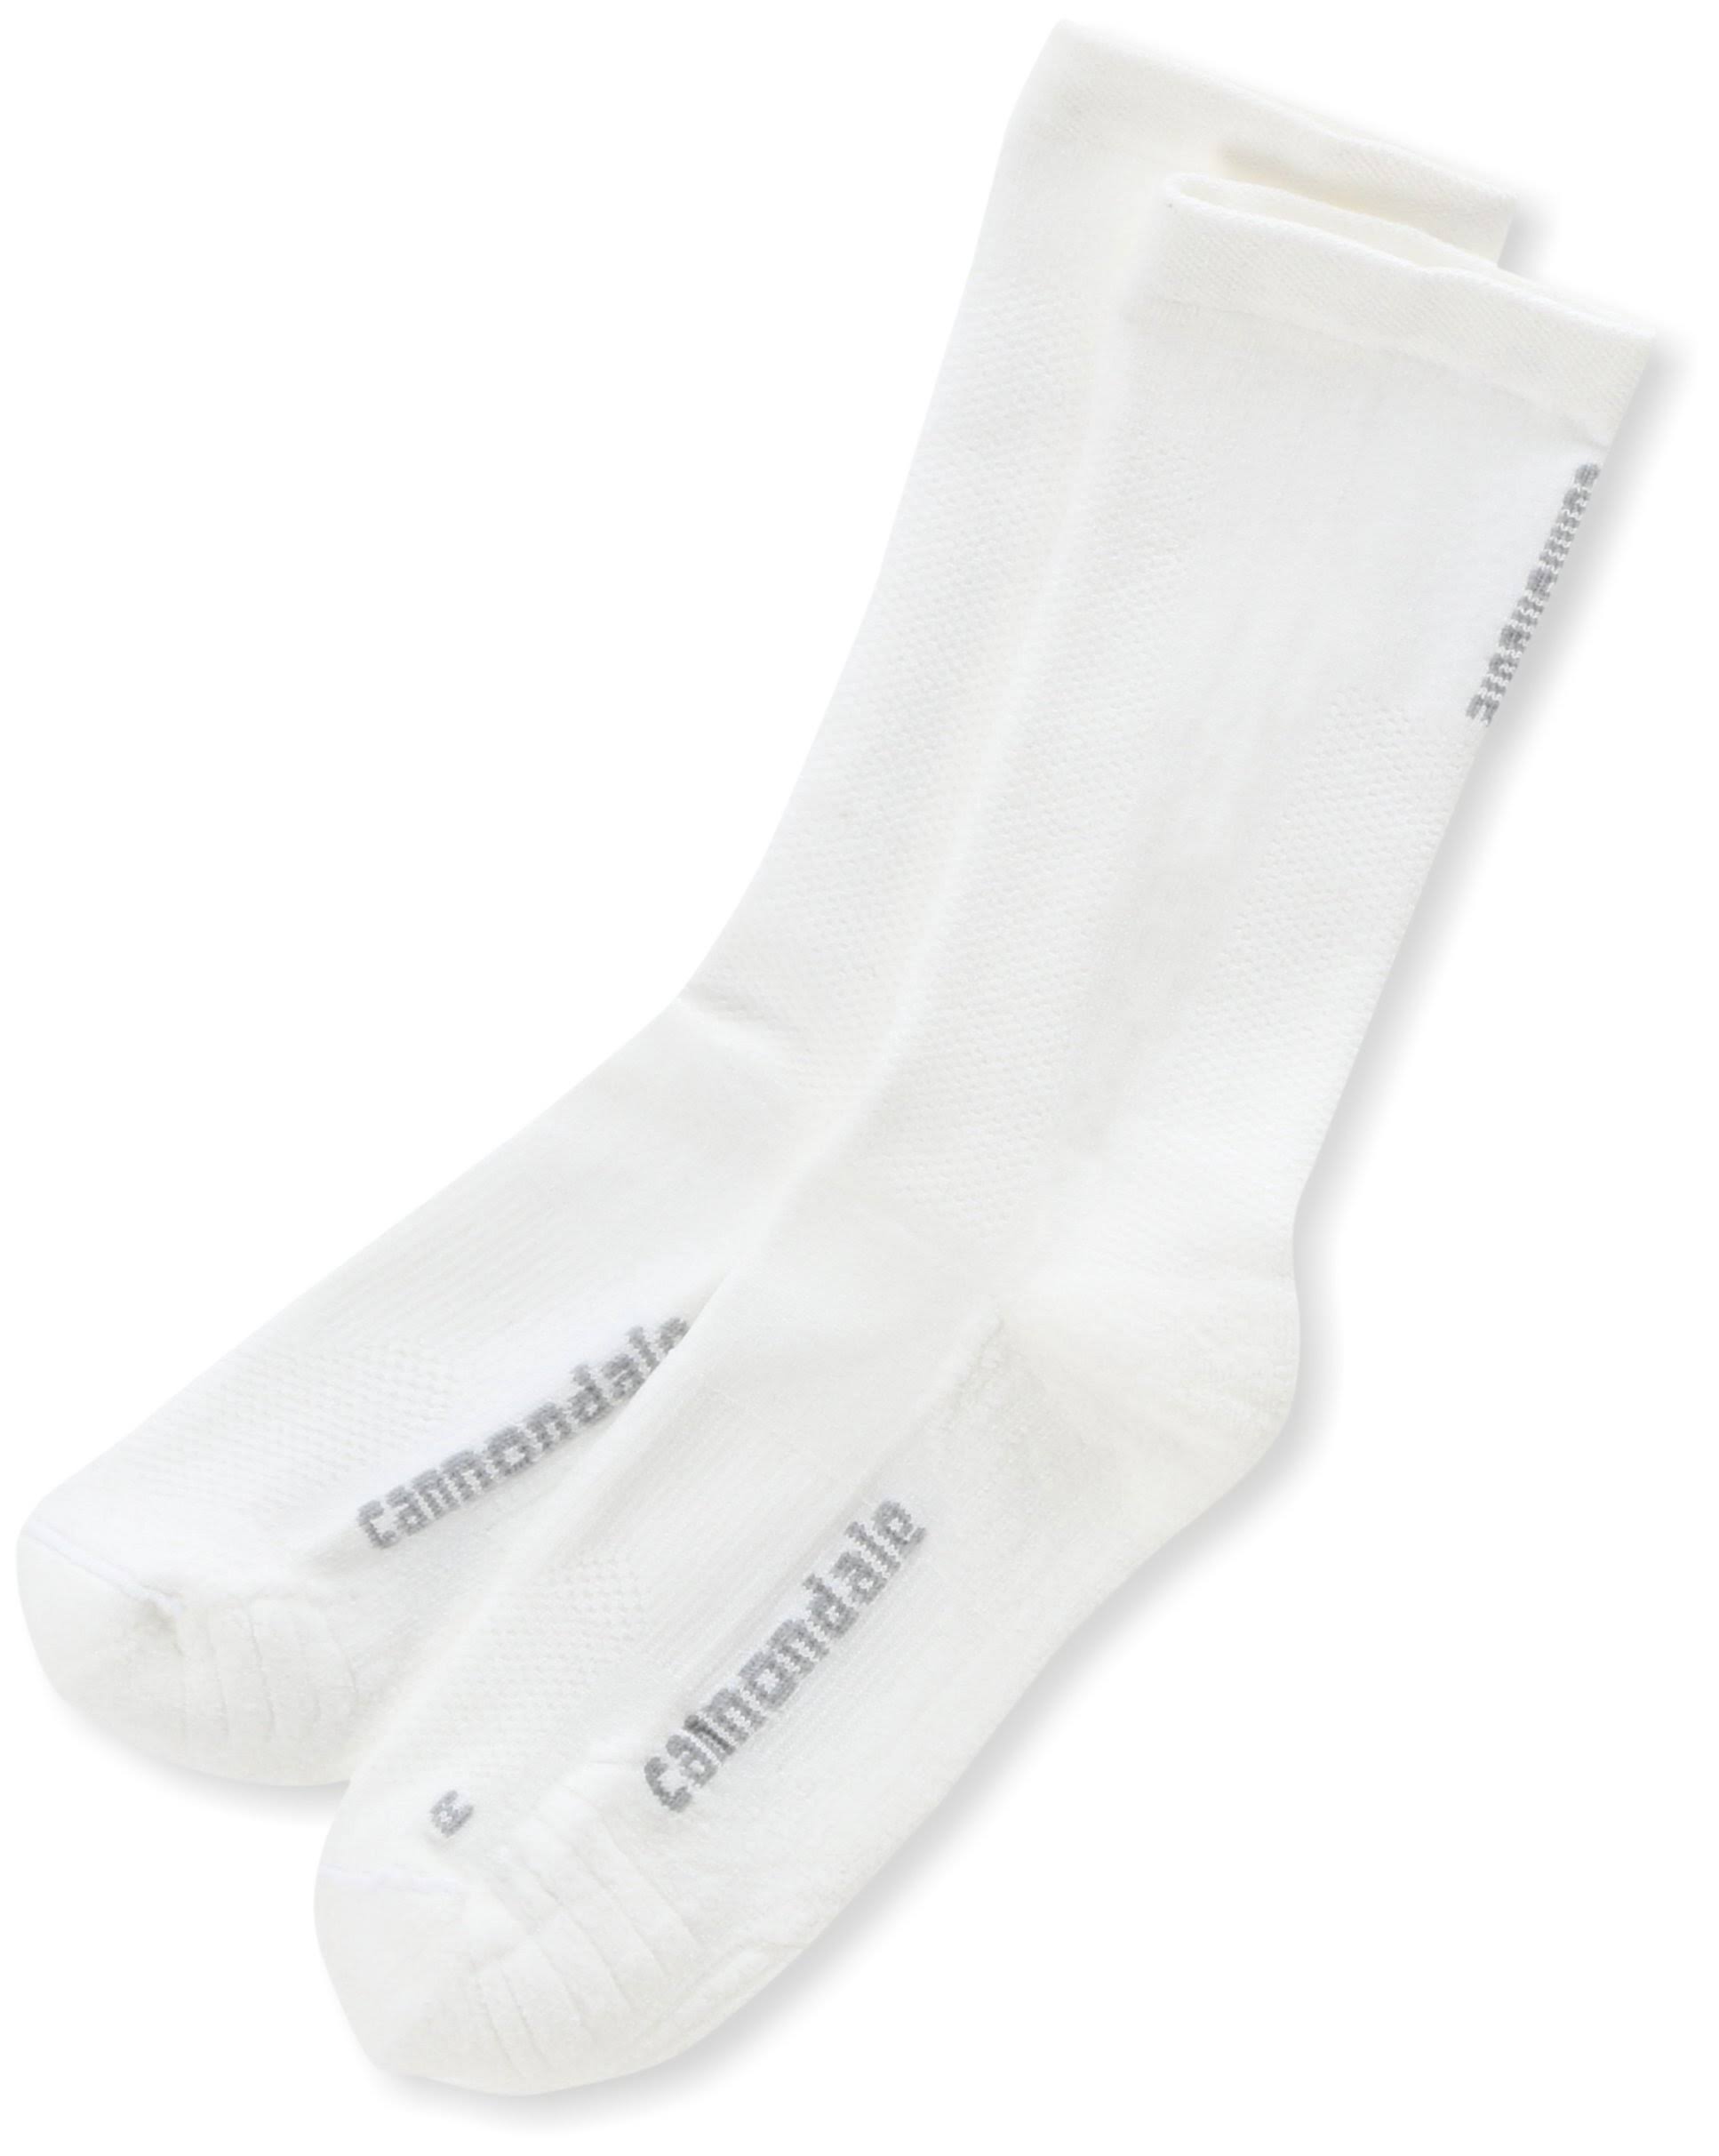 Cannondale High Socks - White